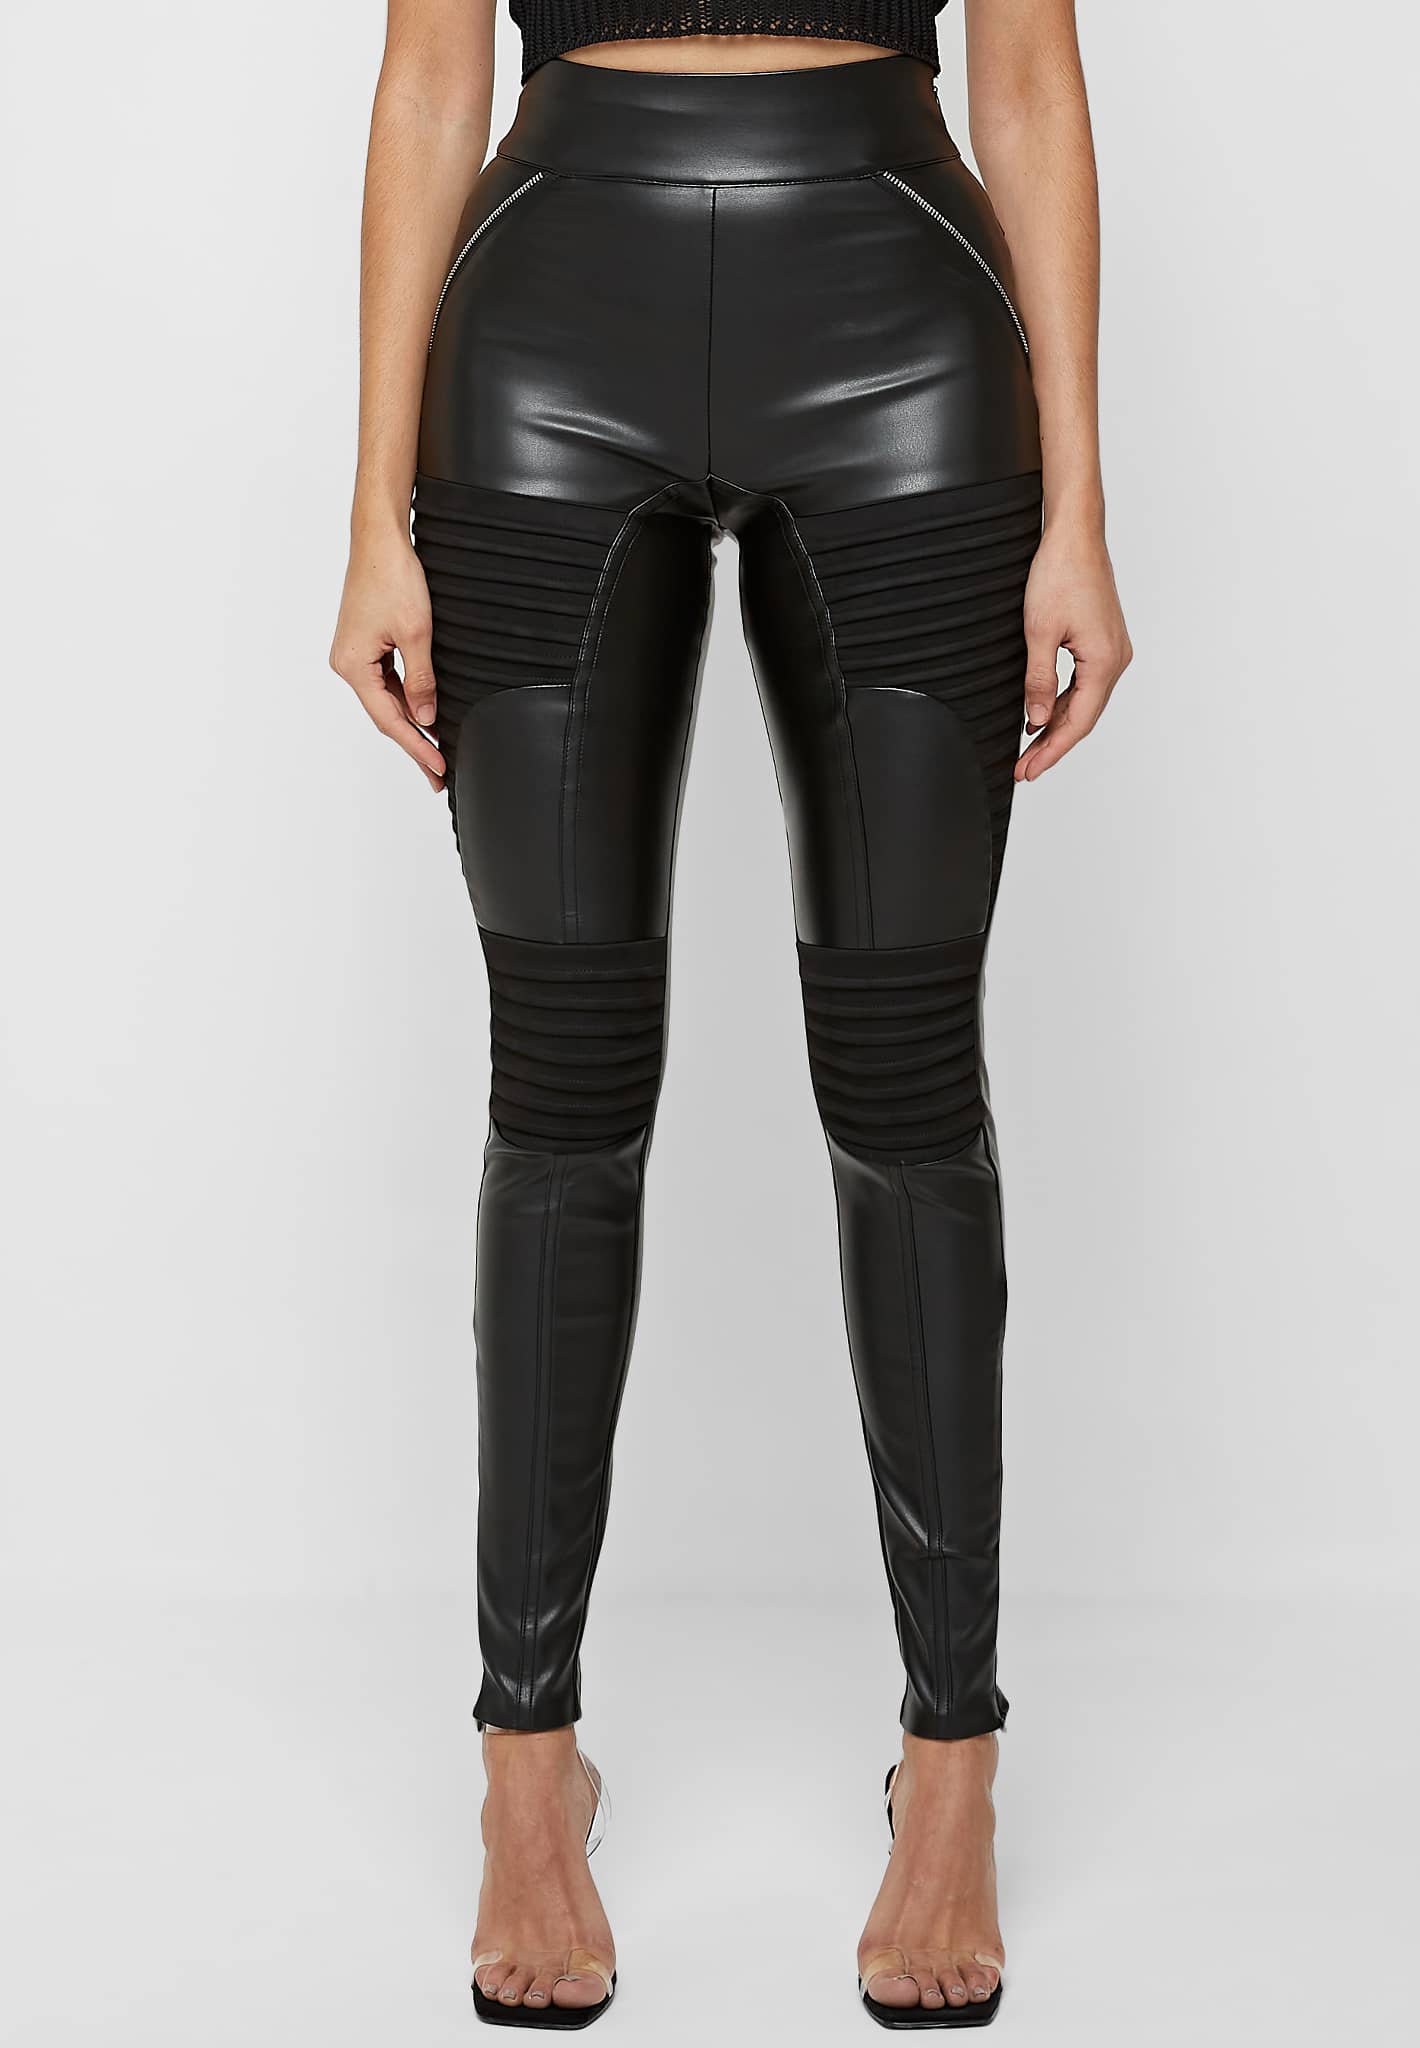 MCEDAR Women’s Faux Leather Leggings Plus Size Girls High Waisted Sexy  Skinny Pants (Black, Medium Tall)